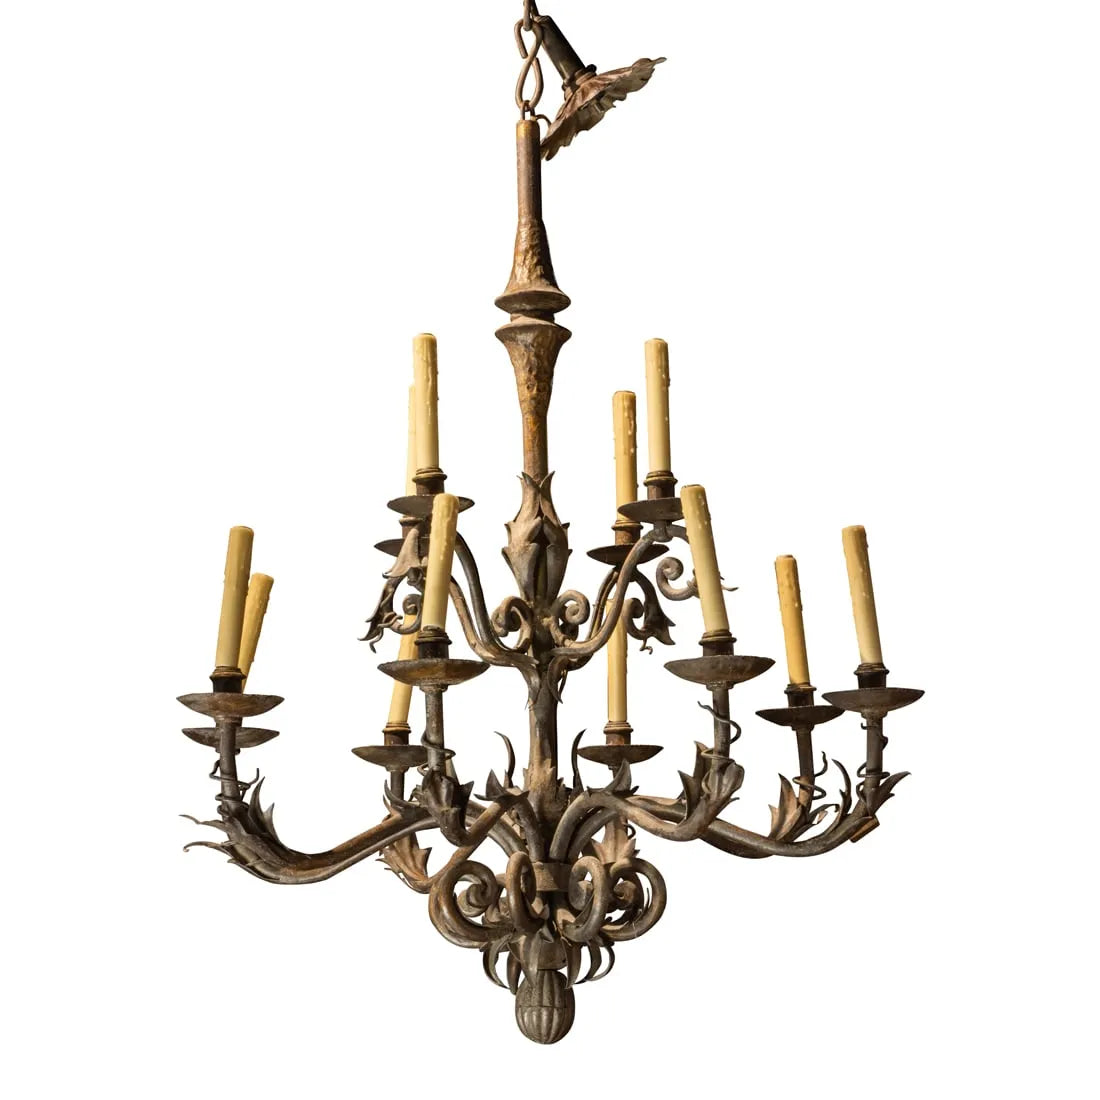 AL1-071: Late 20th Century Spanish Baroque Style Wrought Iron Nine Light Chandelier